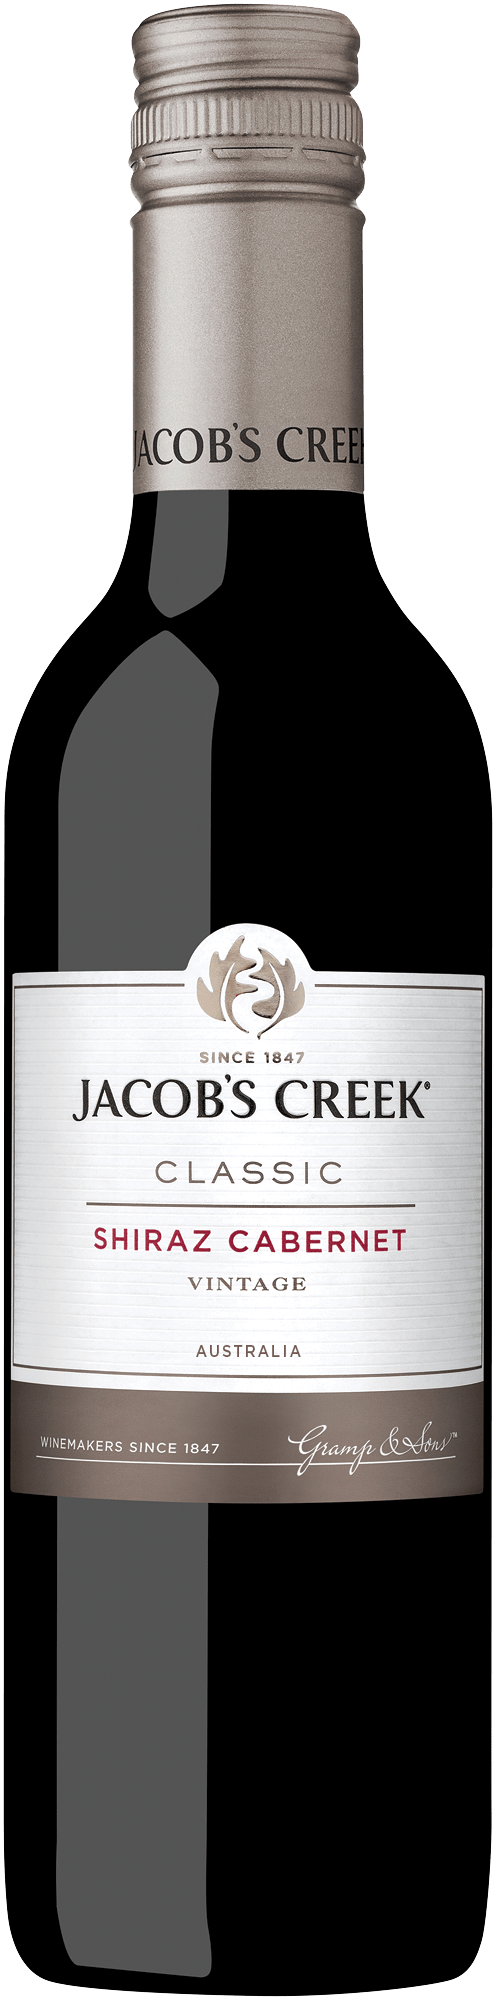 jacobs-creek-shiraz-cabernet_075